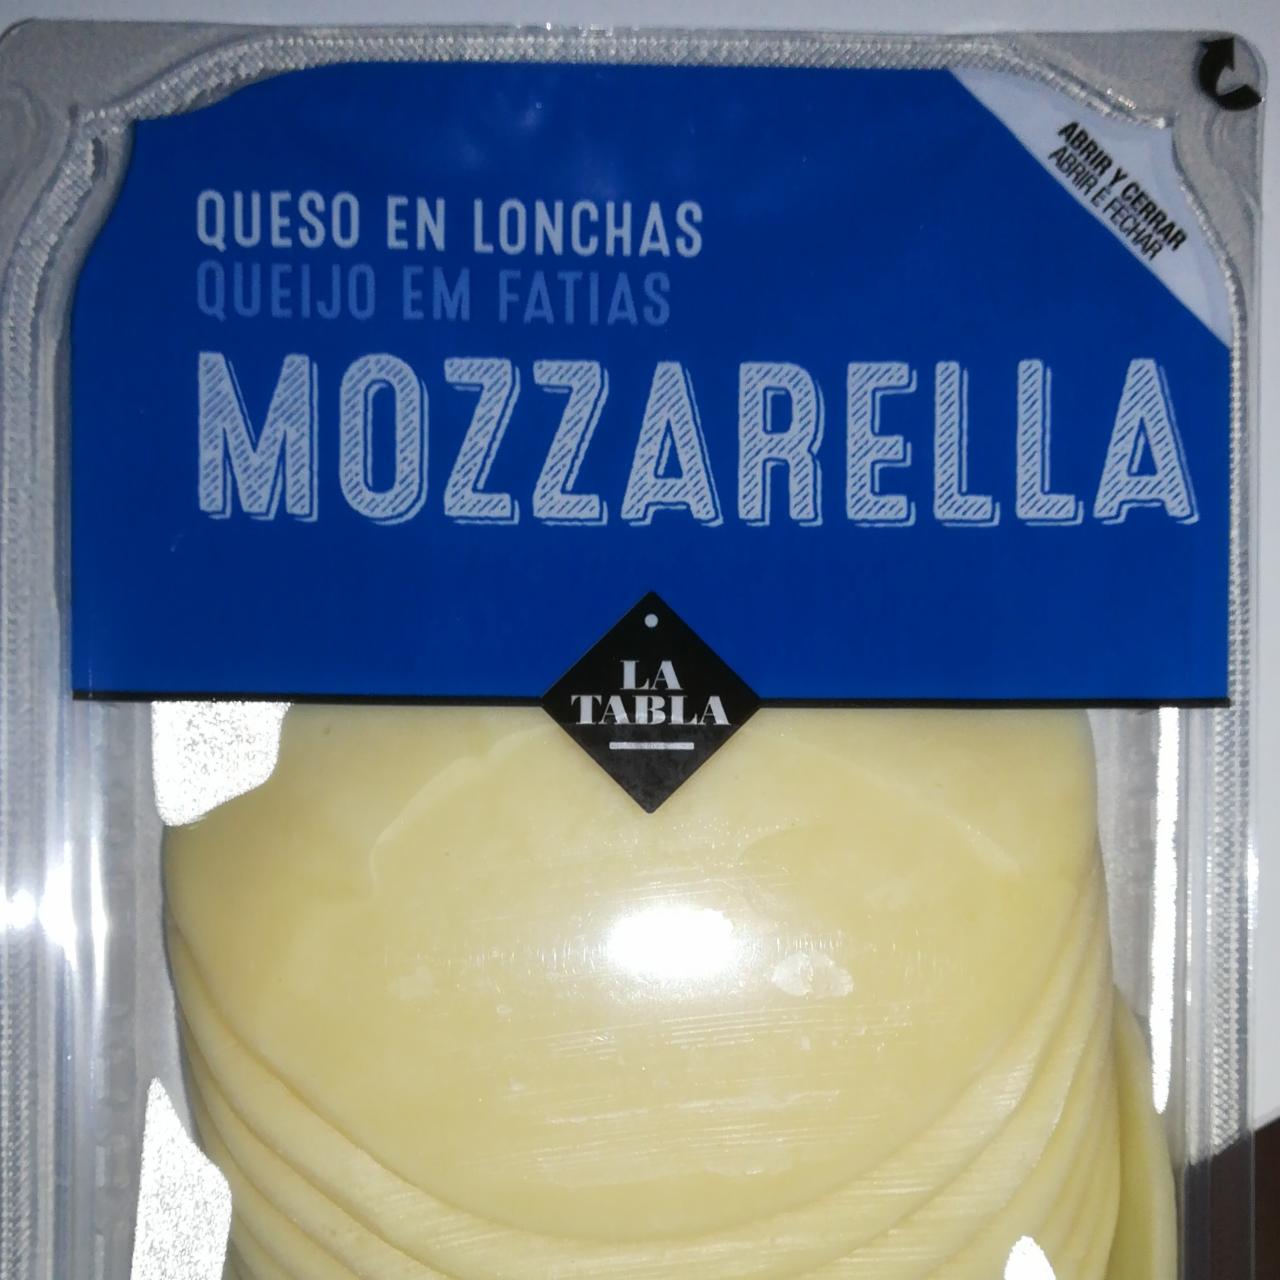 Fotografie - Queso en Lonchas Mozzarella La Tabla